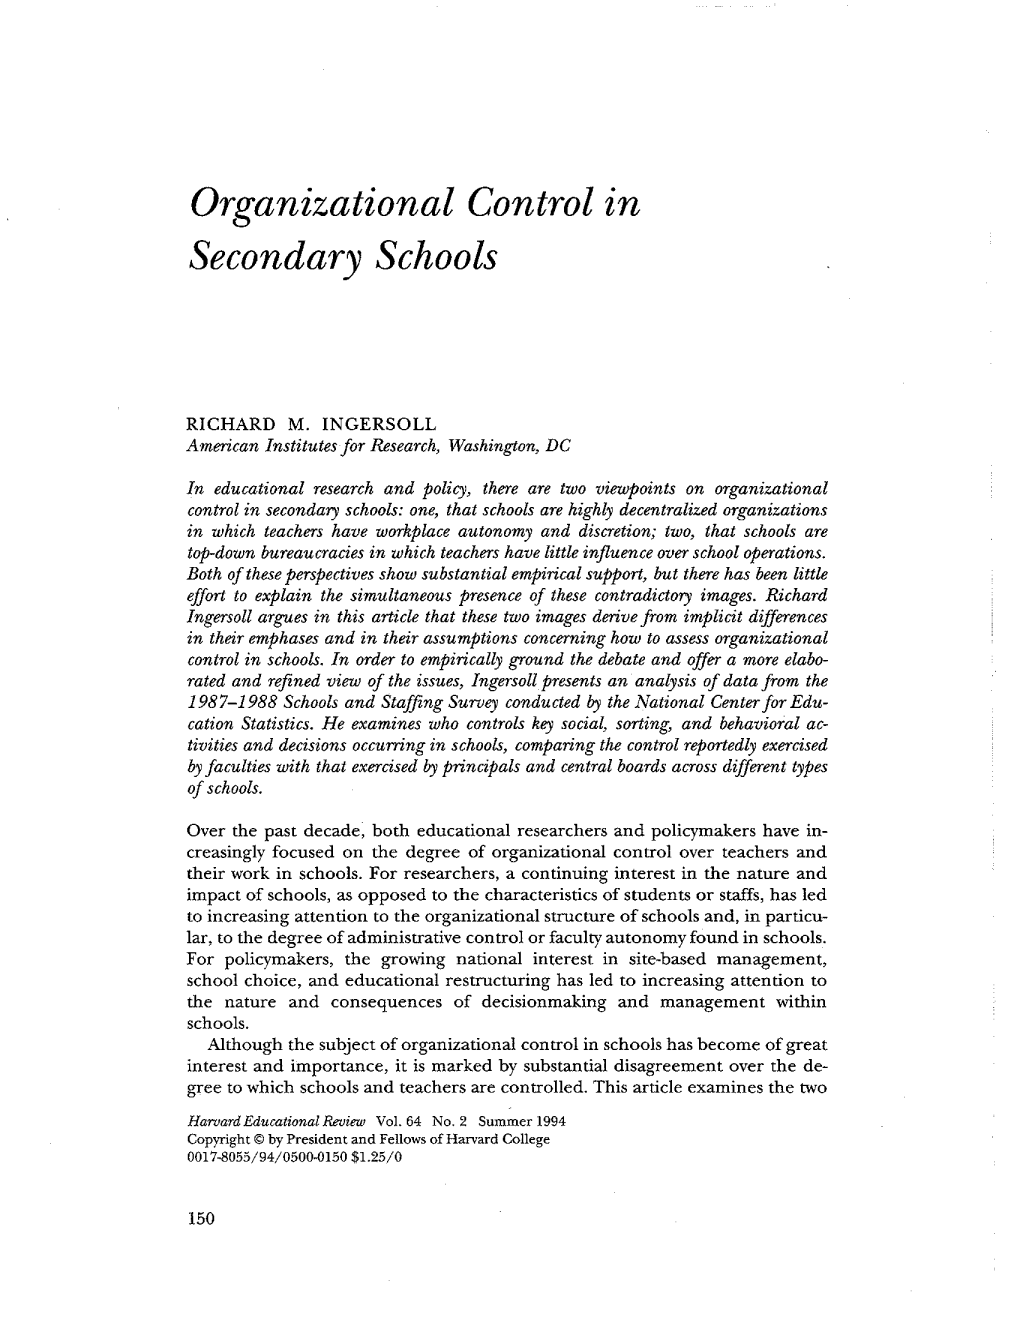 Organizational Control in Secondary Schools